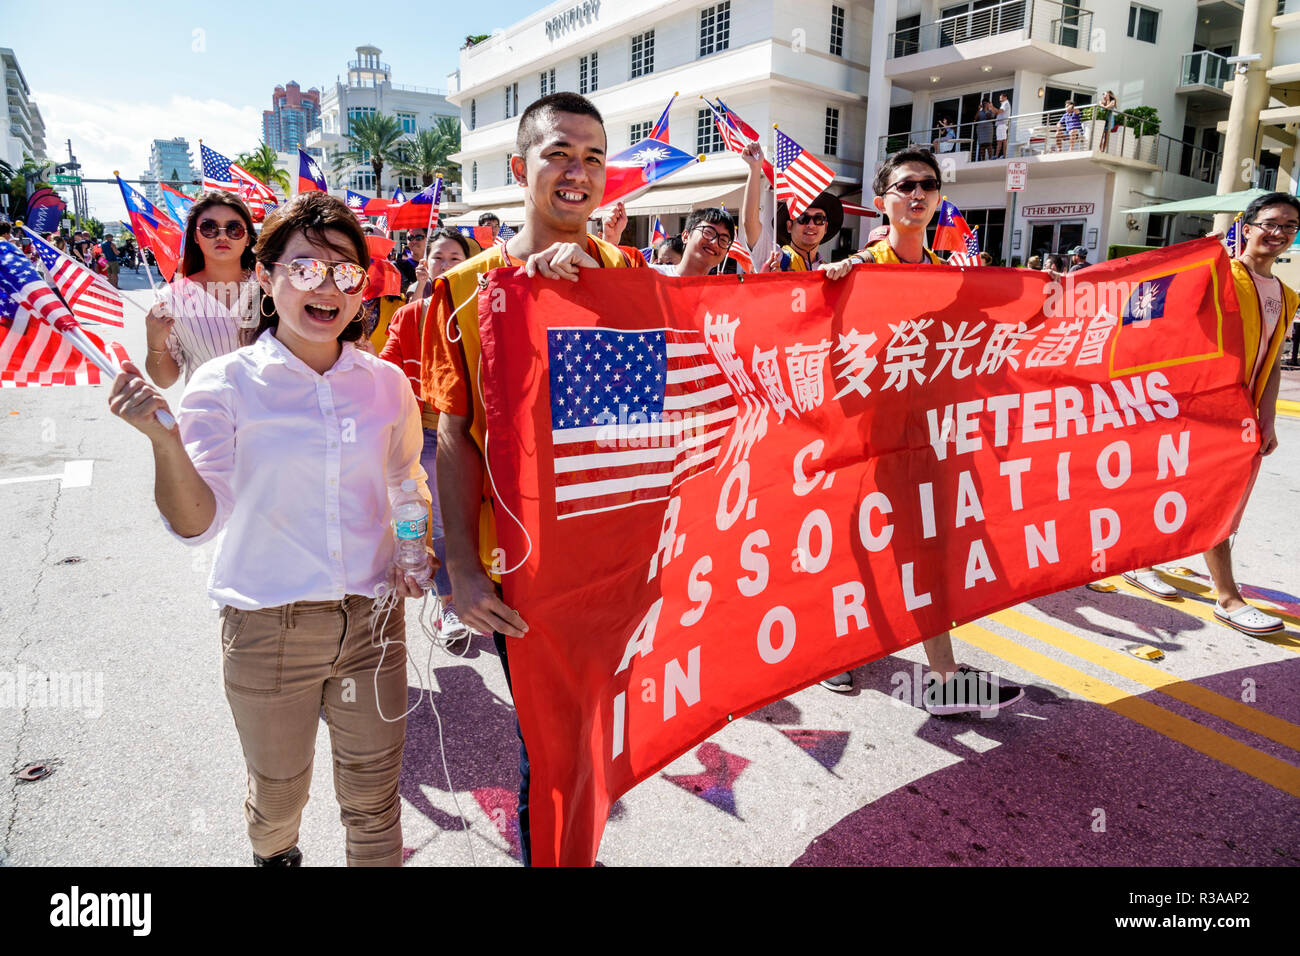 Miami Beach Florida,Ocean Drive,Veterans Day Parade activities,ROC Republic China Association,Taiwanese,Asian man men male,marching banner,FL181115052 Stock Photo